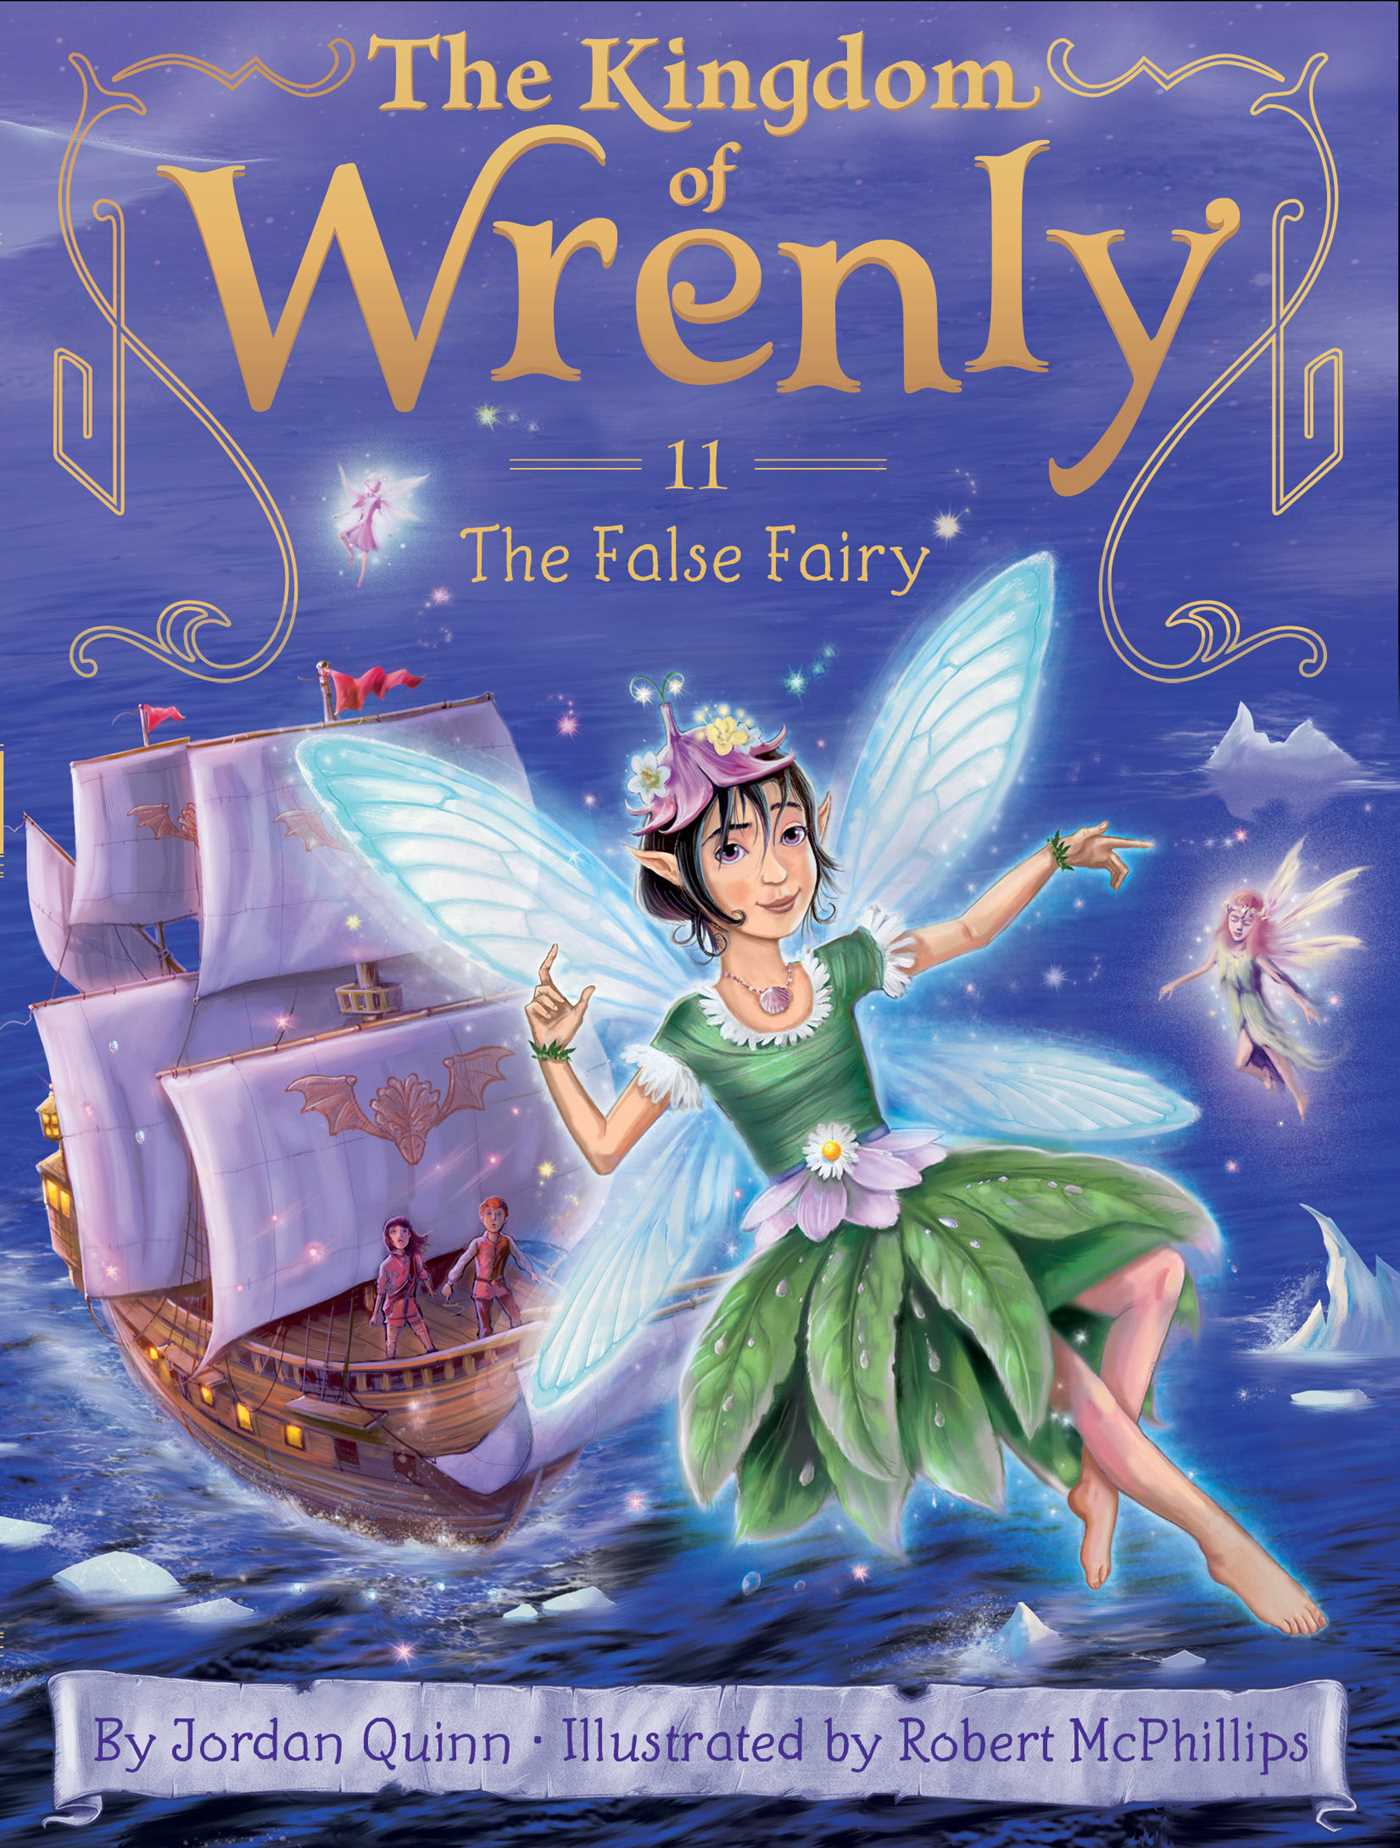 The False Fairy: #11 of The Kingdom of Wrenly - Paperback | Jordan Quinn by Simon & Schuster Book